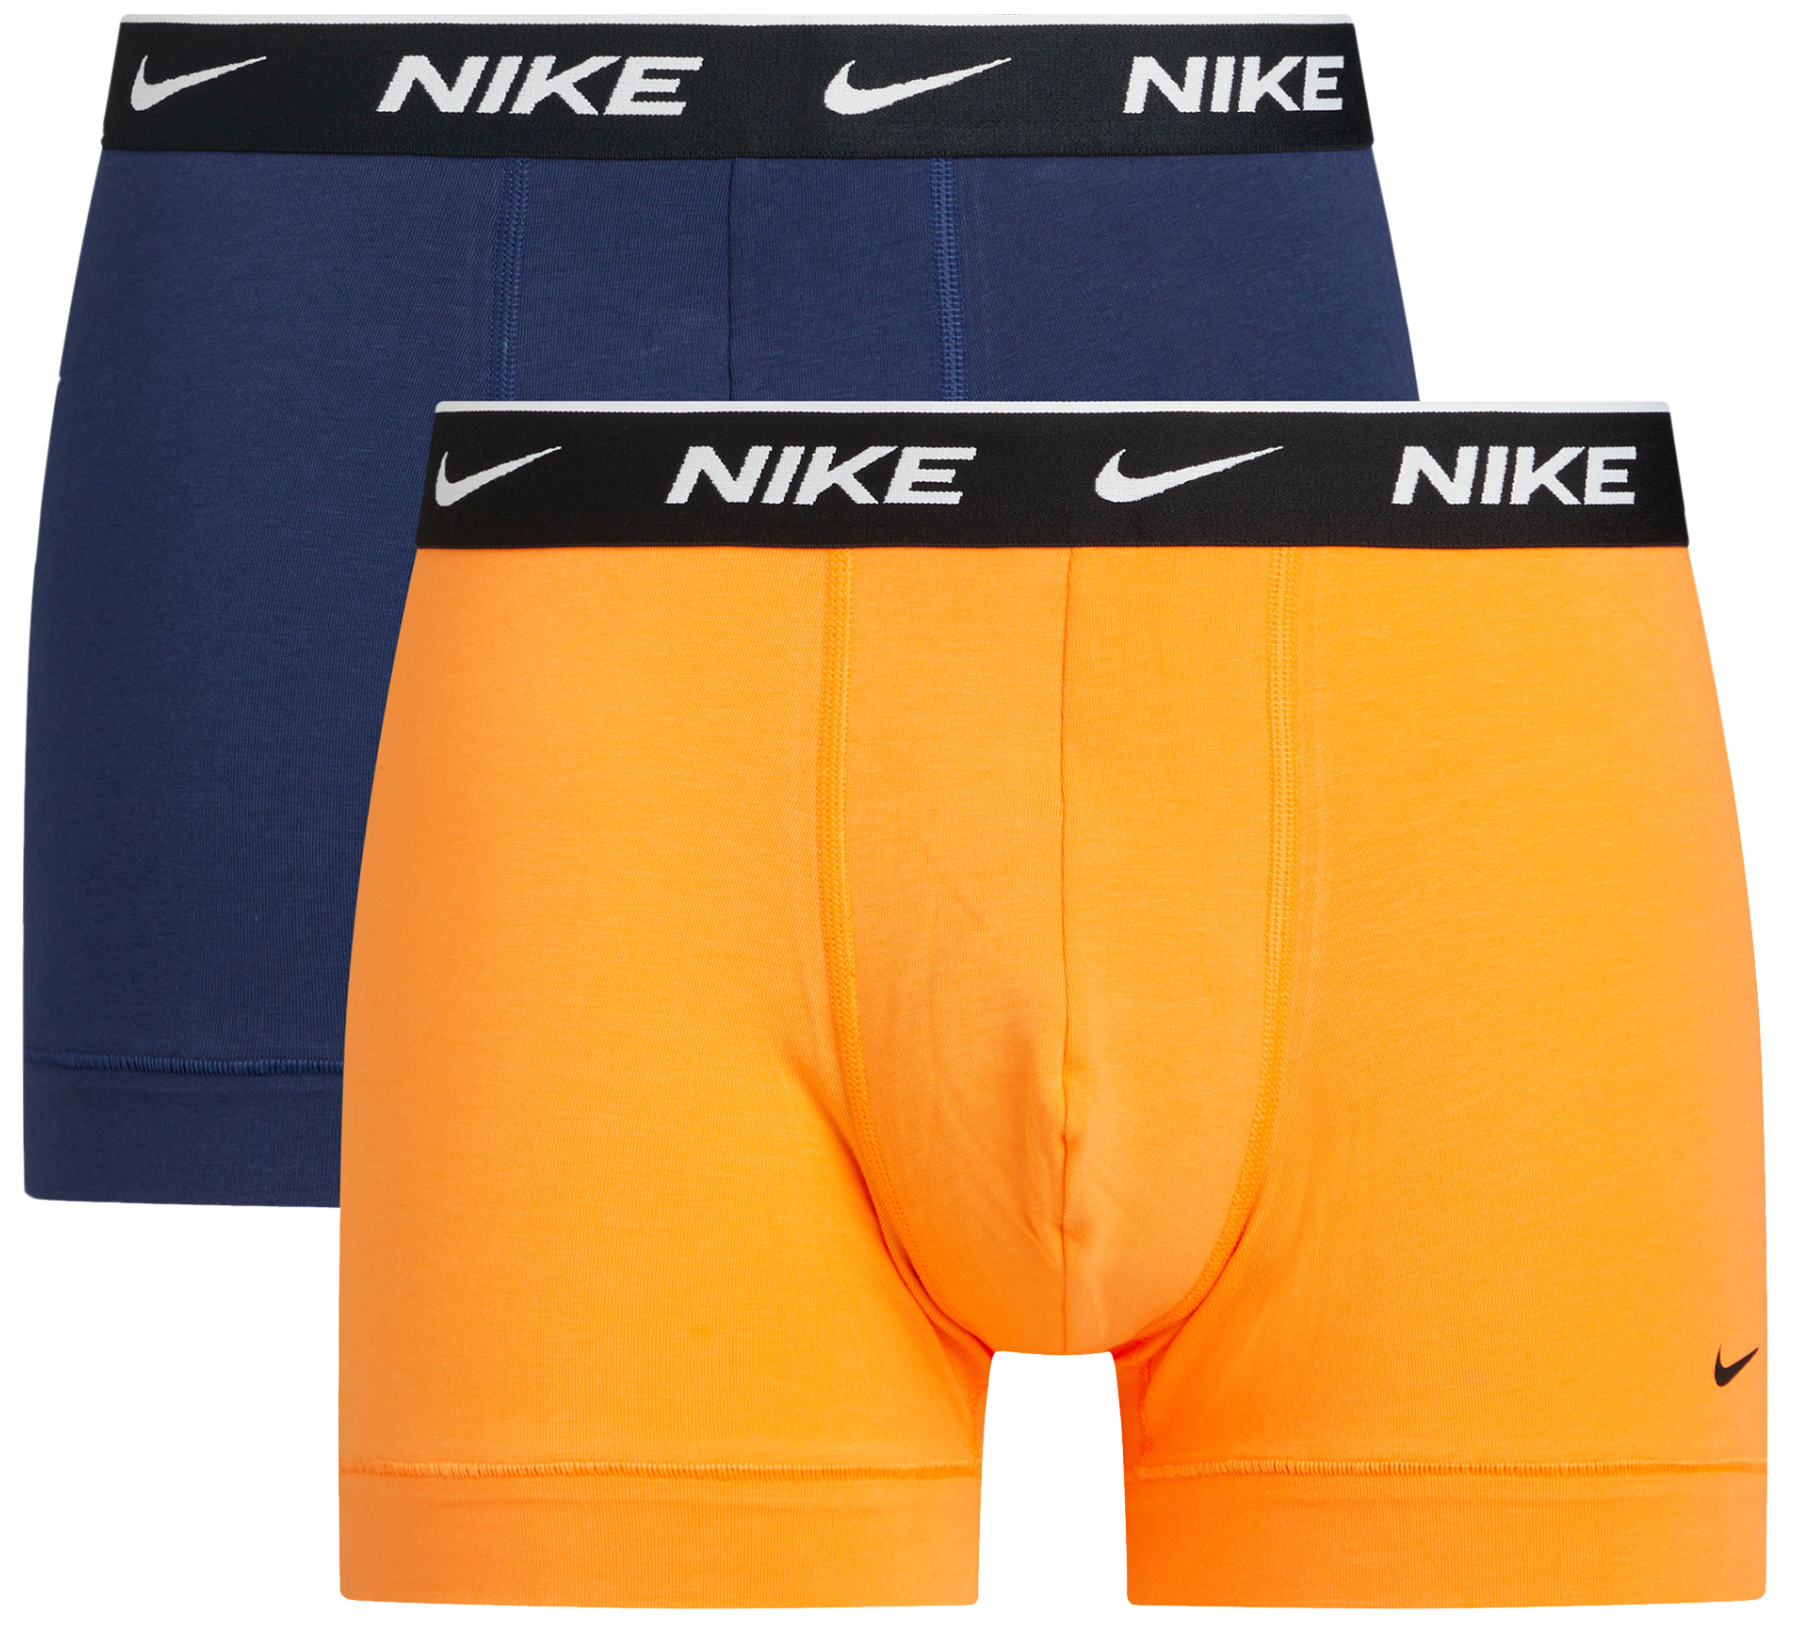 Boxer shorts Nike Cotton Trunk Boxershort 2er Pack